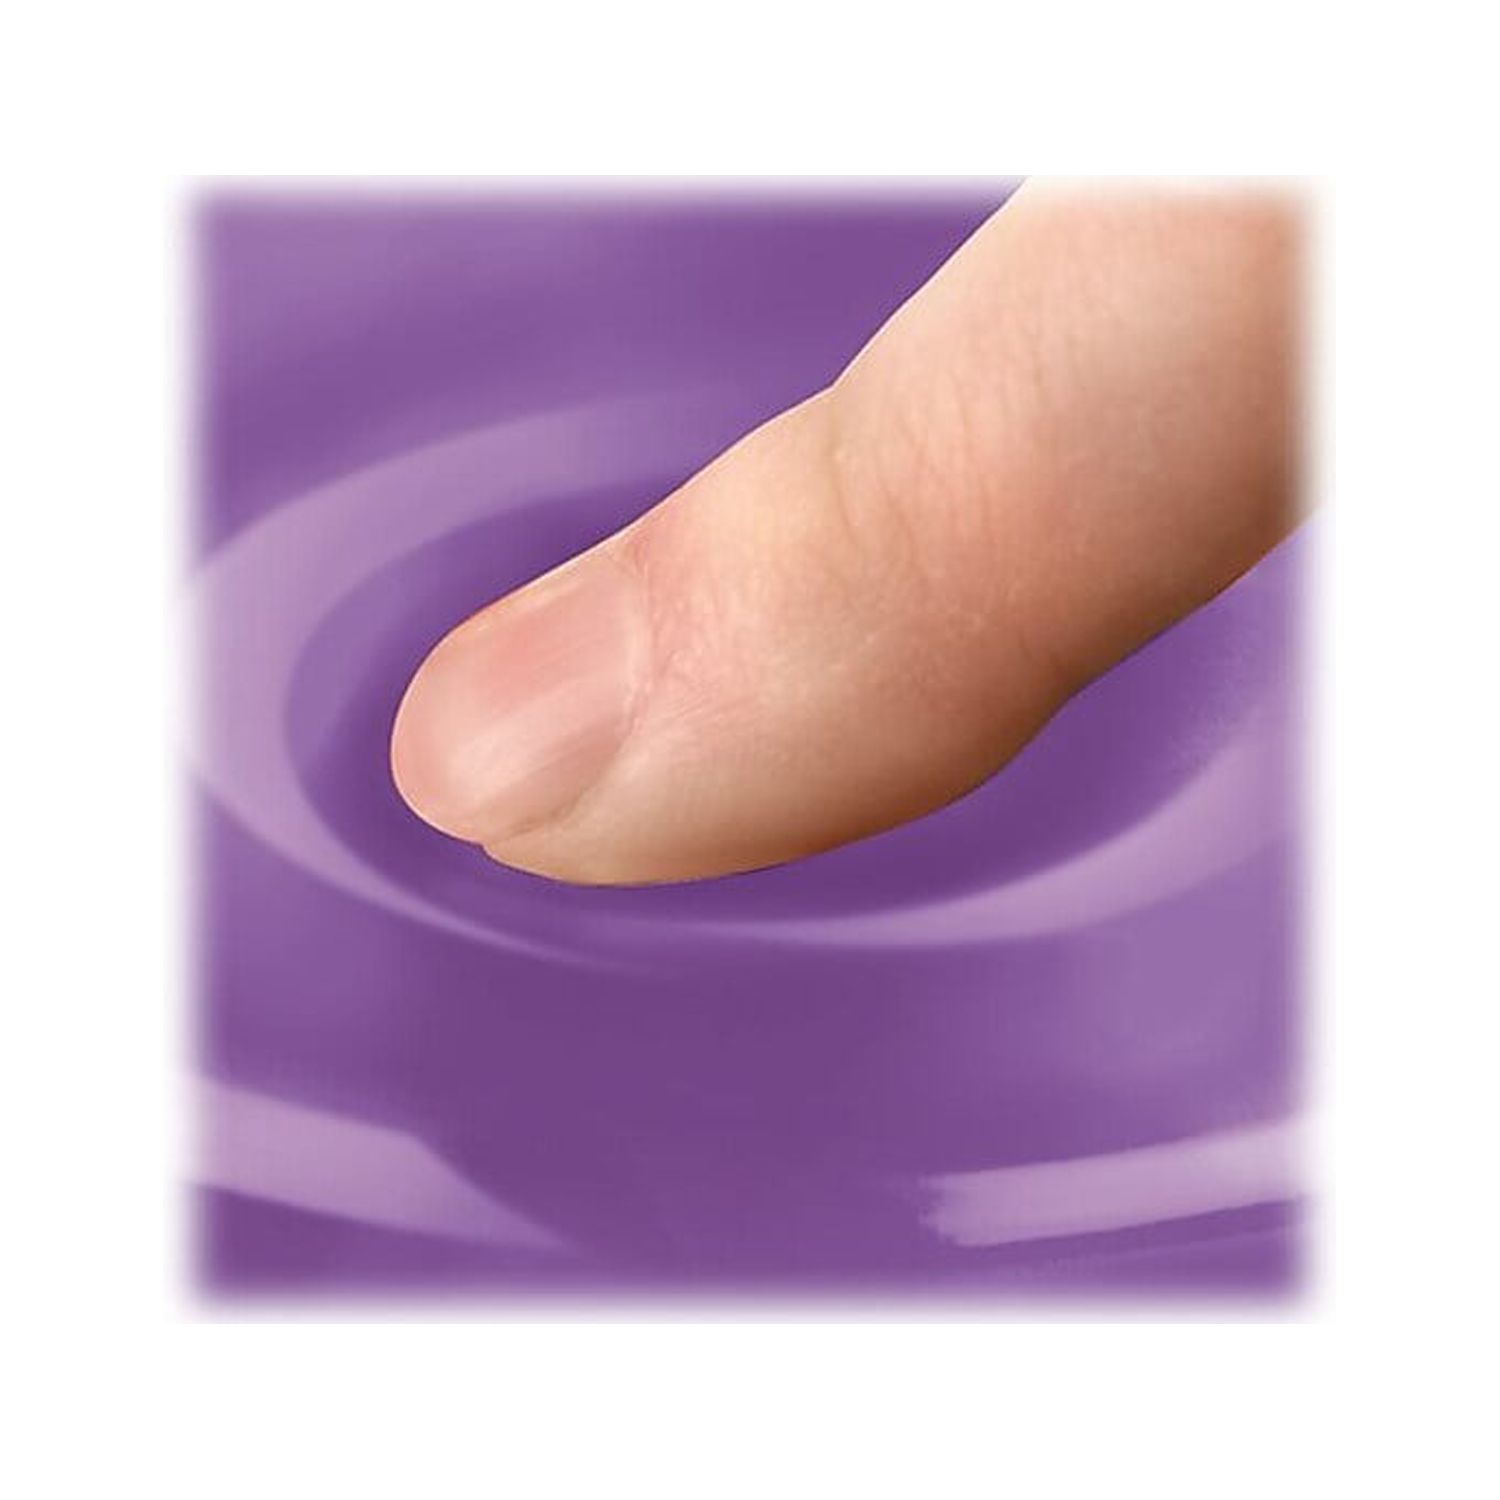 Fellowes 91437 Purple Crystal Gel Wrist Rest - image 2 of 4